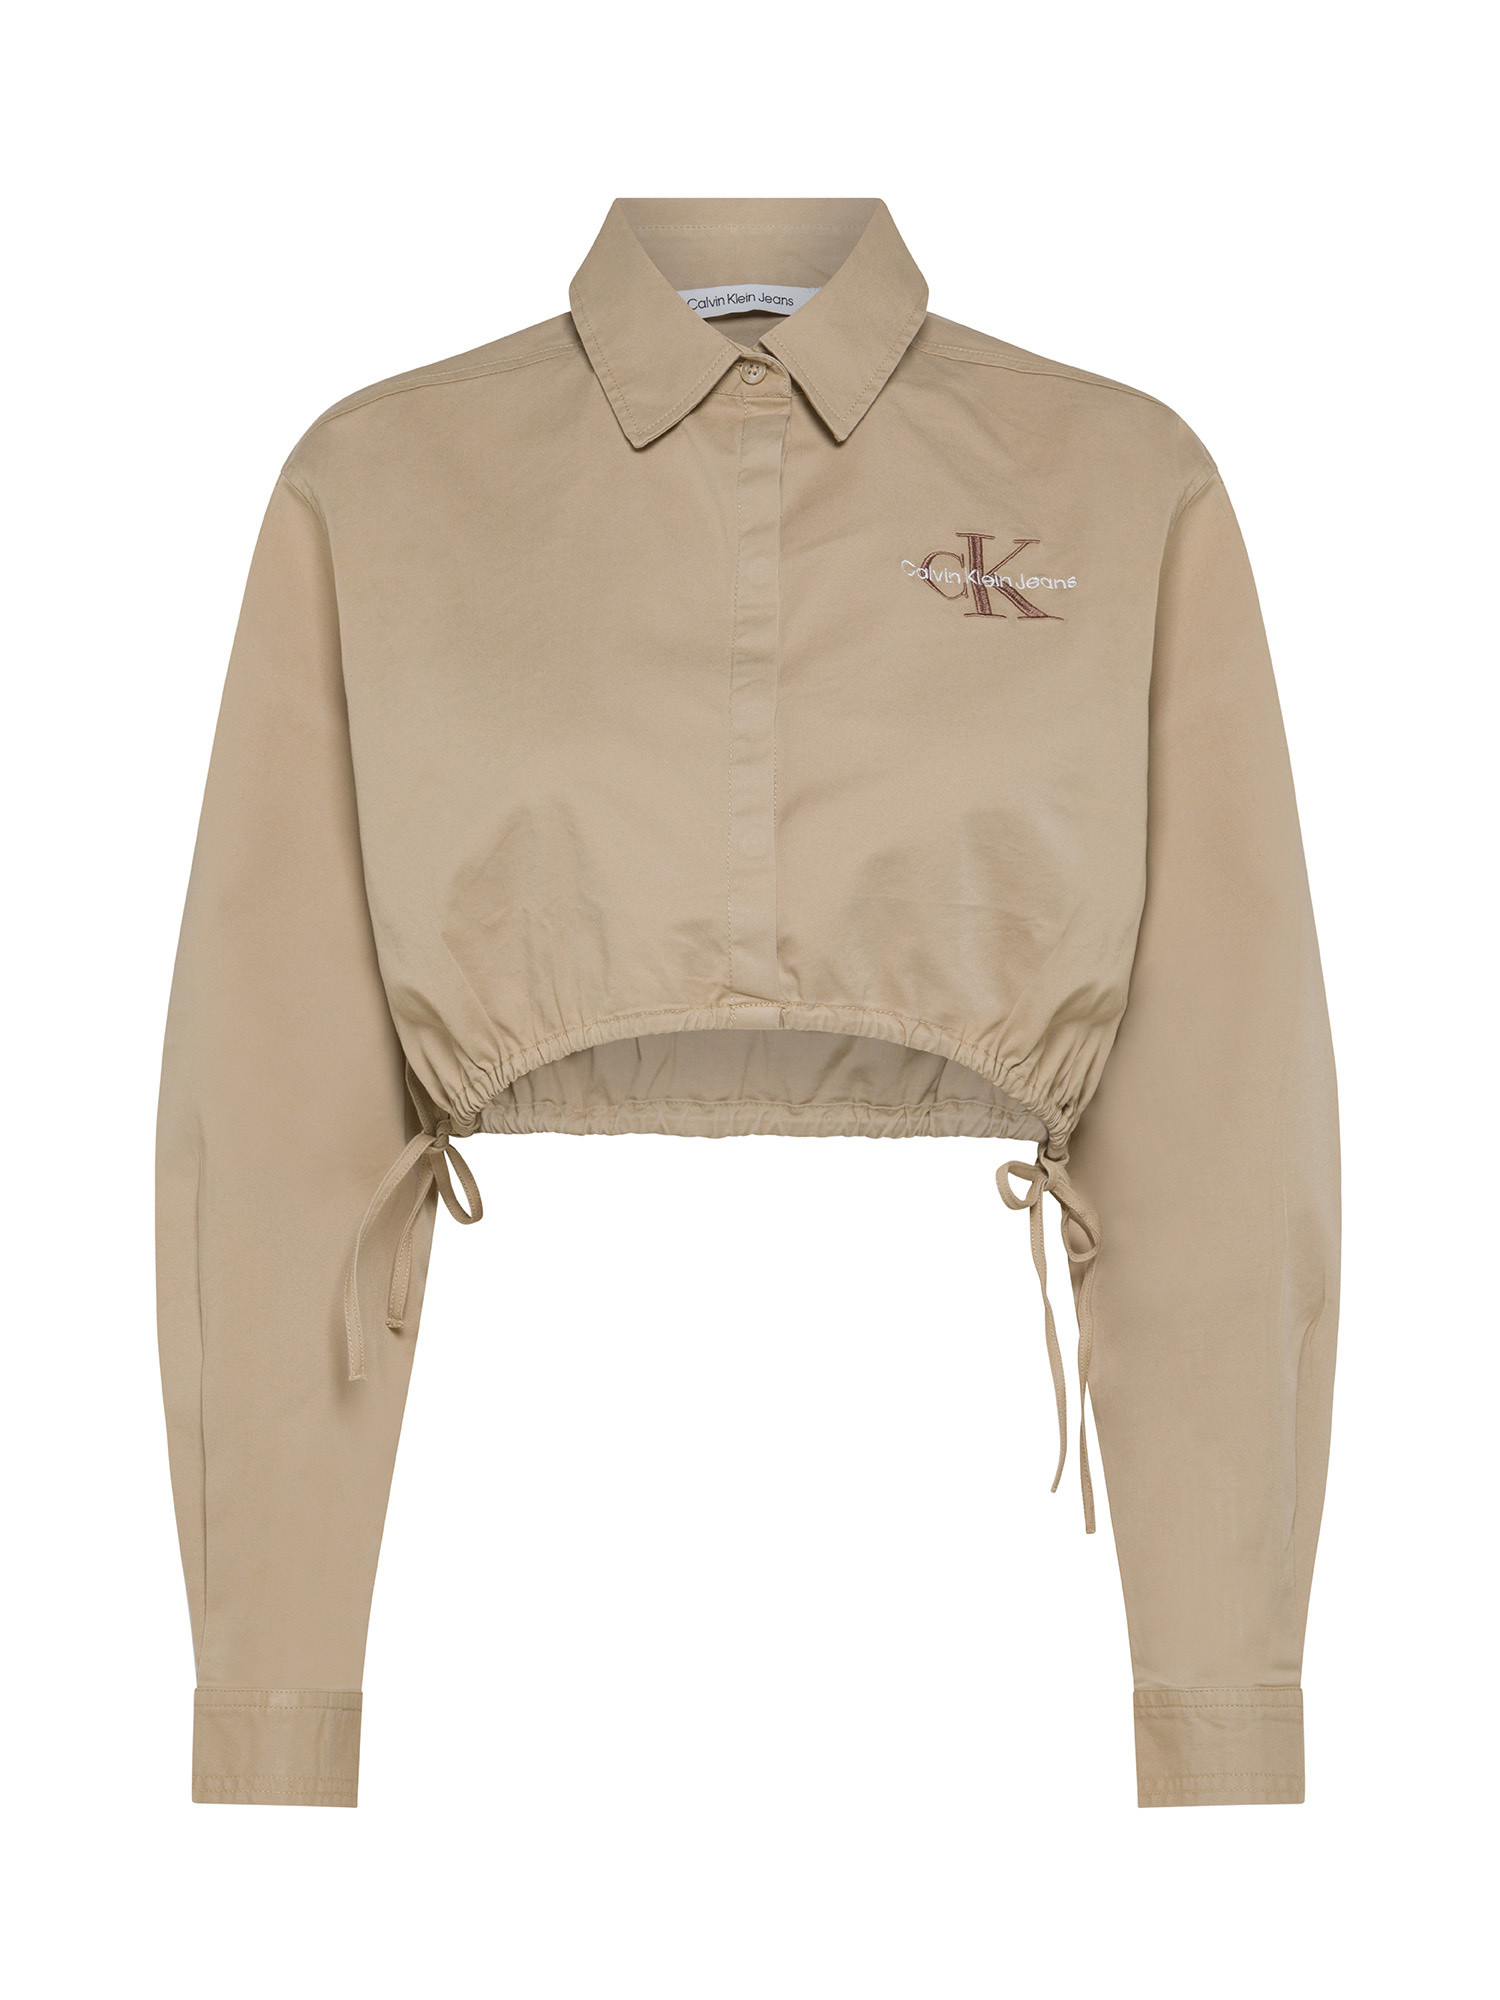 Calvin Klein Jeans - Logo cropped shirt, Beige, large image number 0